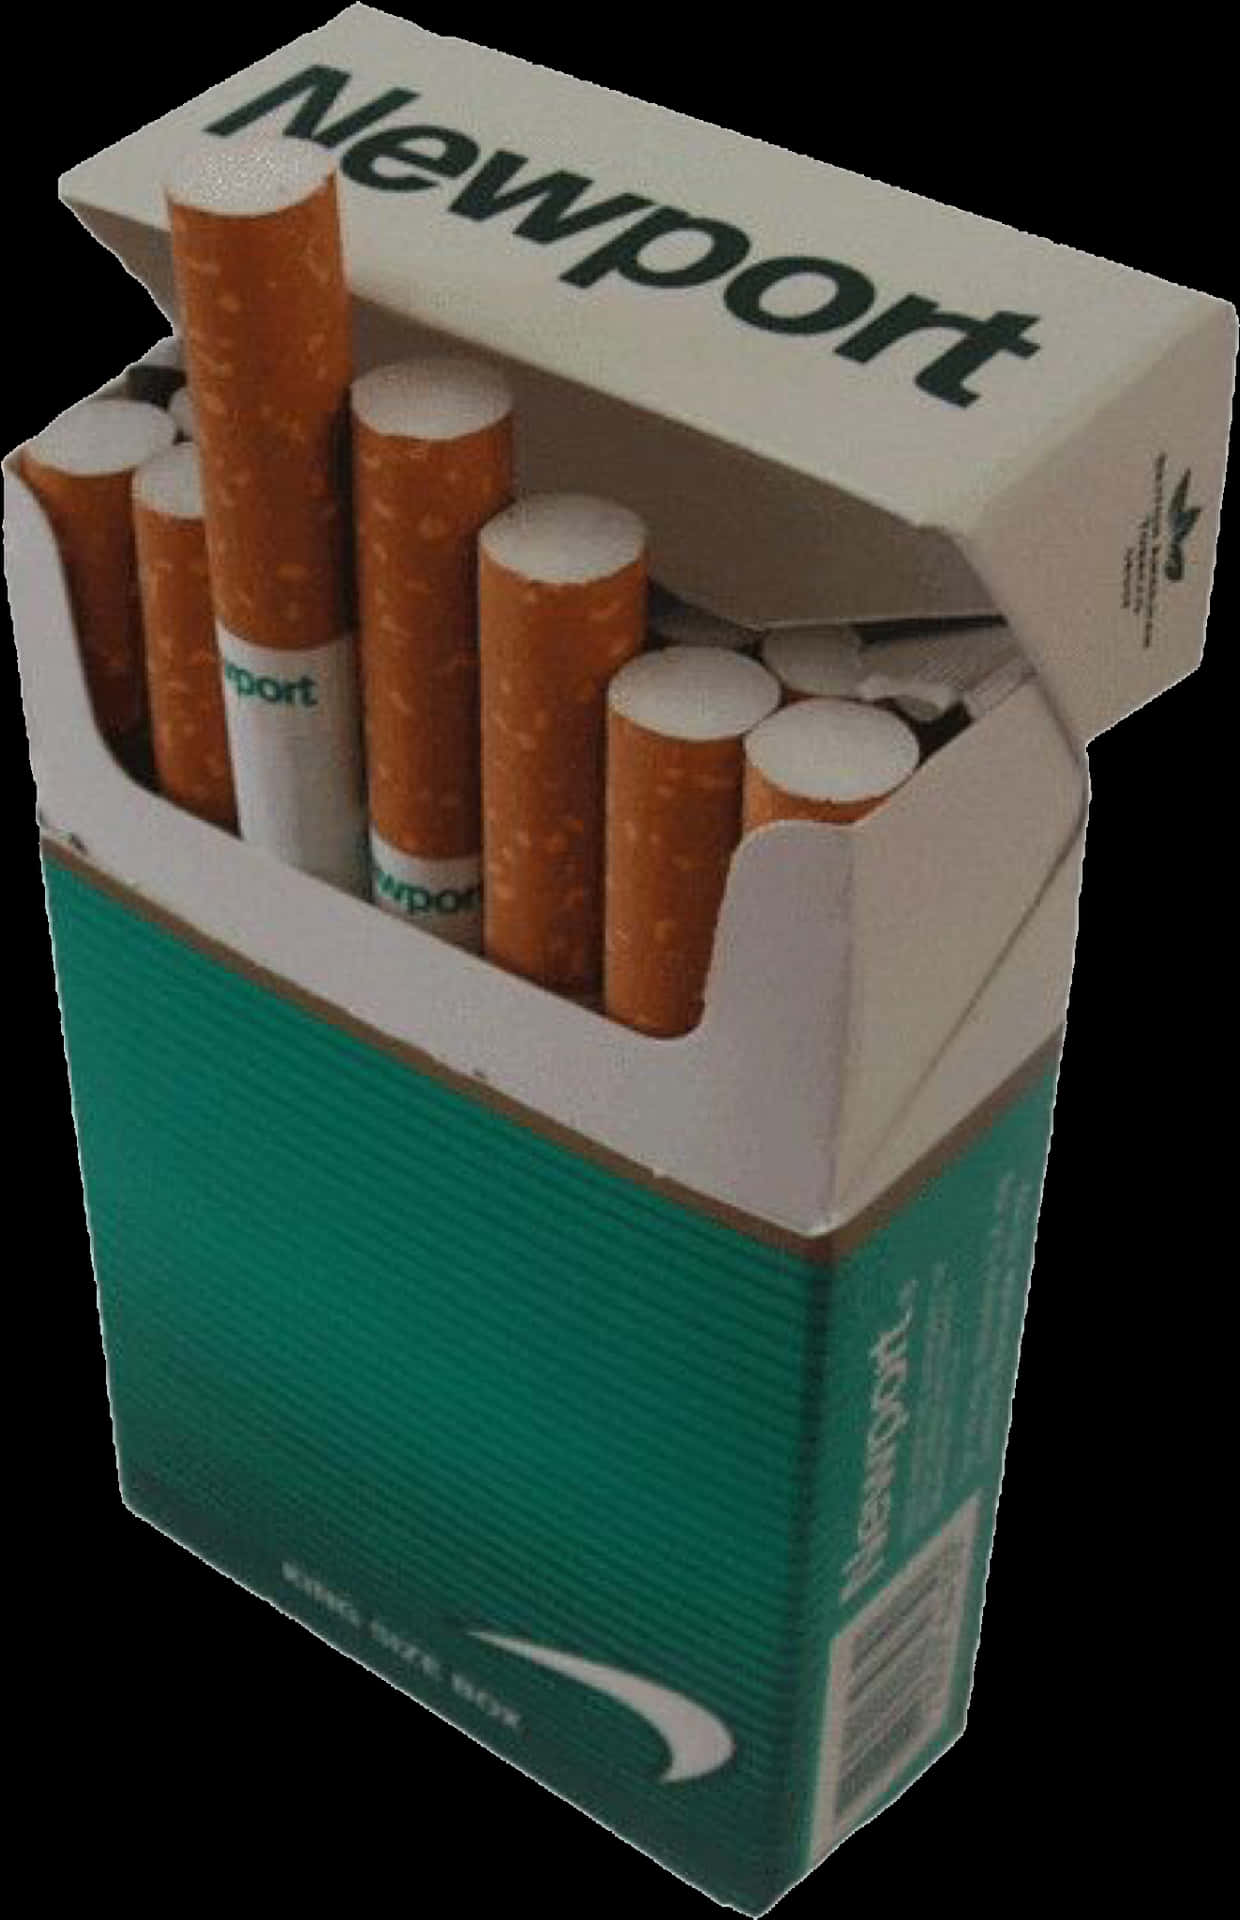 Newport Cigarettes Pack Open PNG